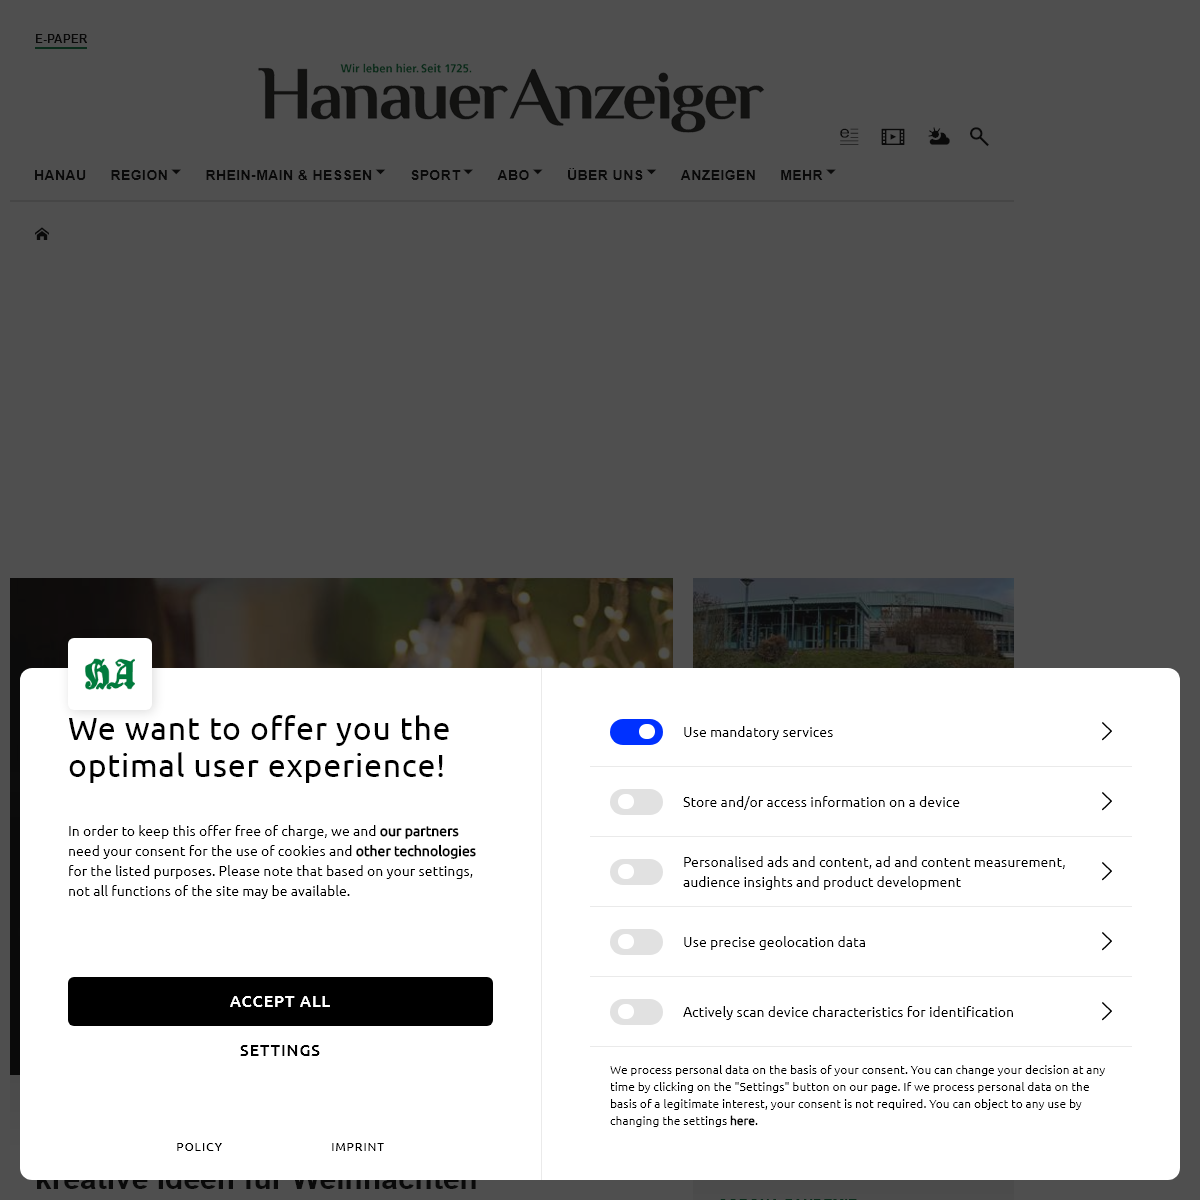 A complete backup of hanauer.de